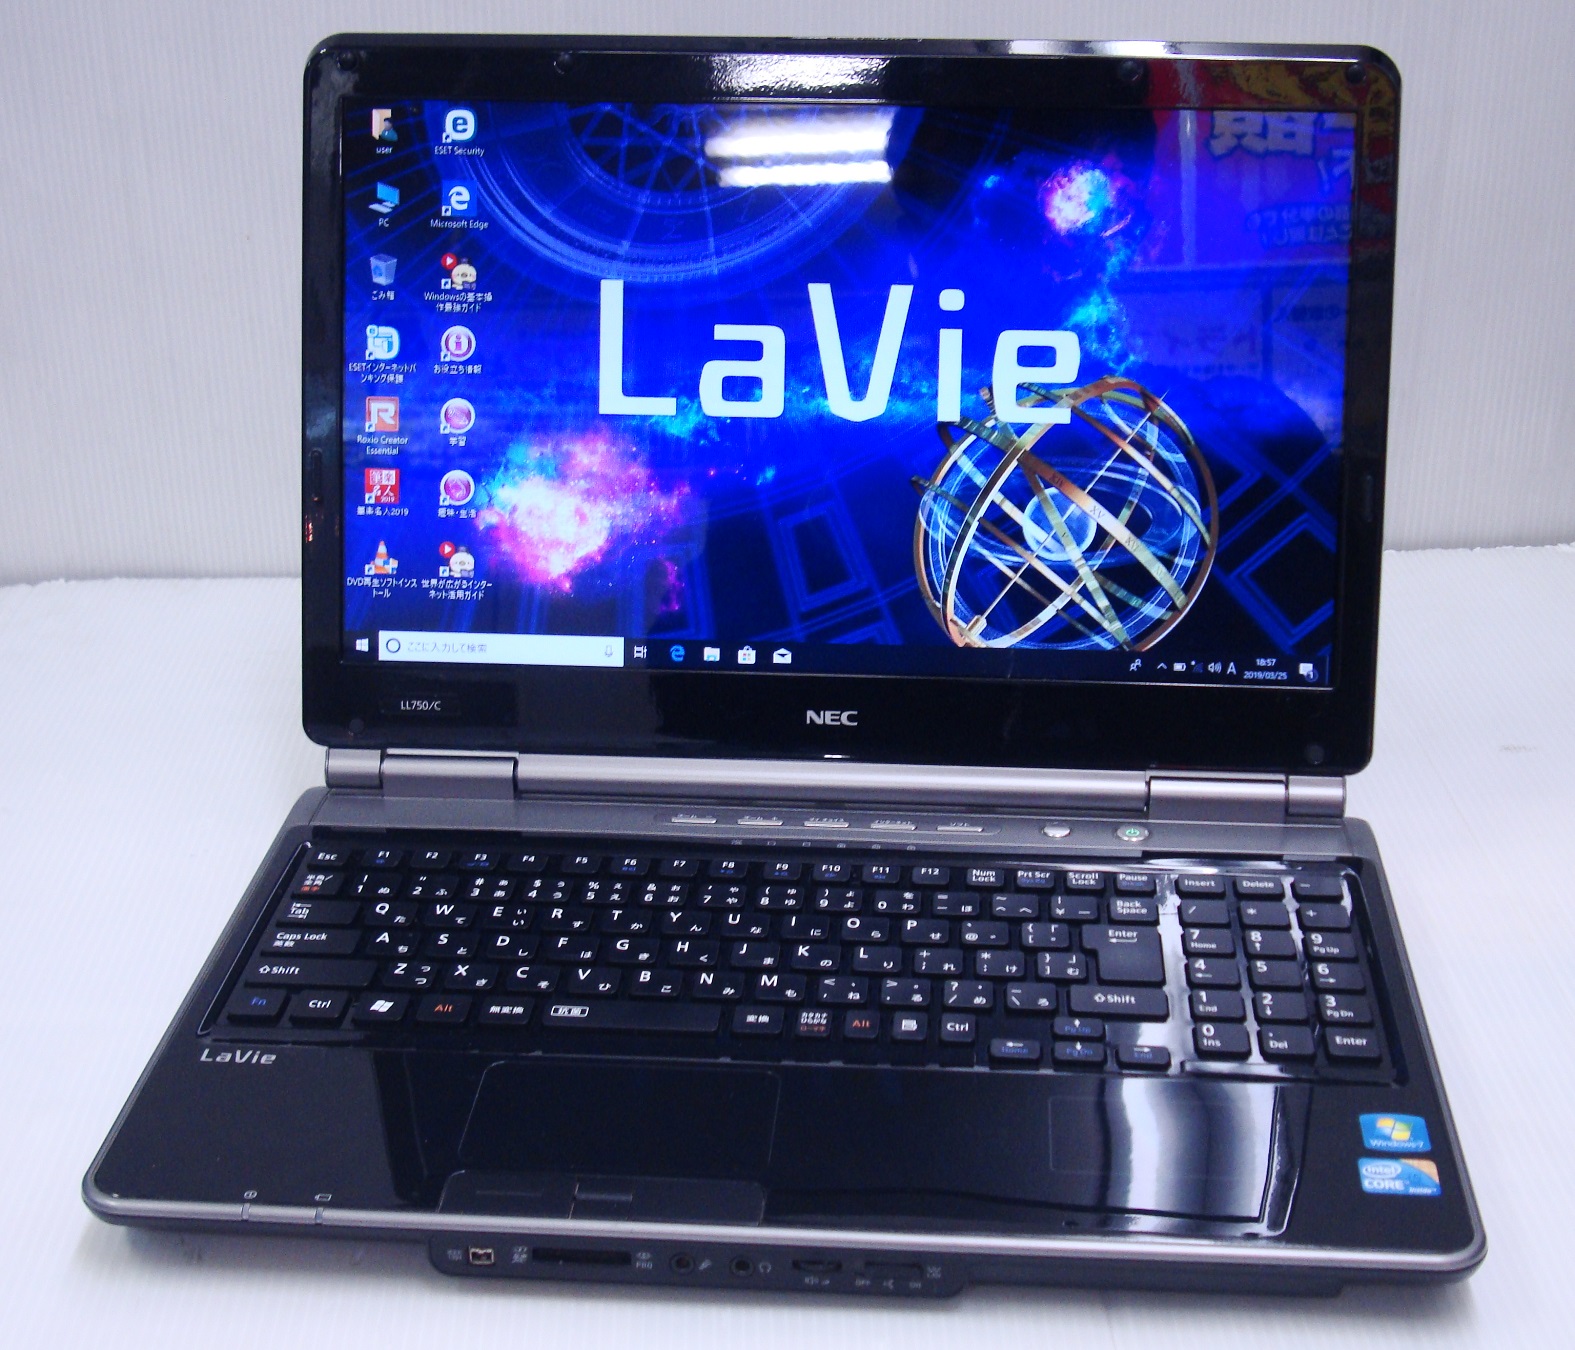 NEC LaVie PC-LL750/C CPU:Corei5 460M 2.53GHz / メモリ:4GB / HDD 